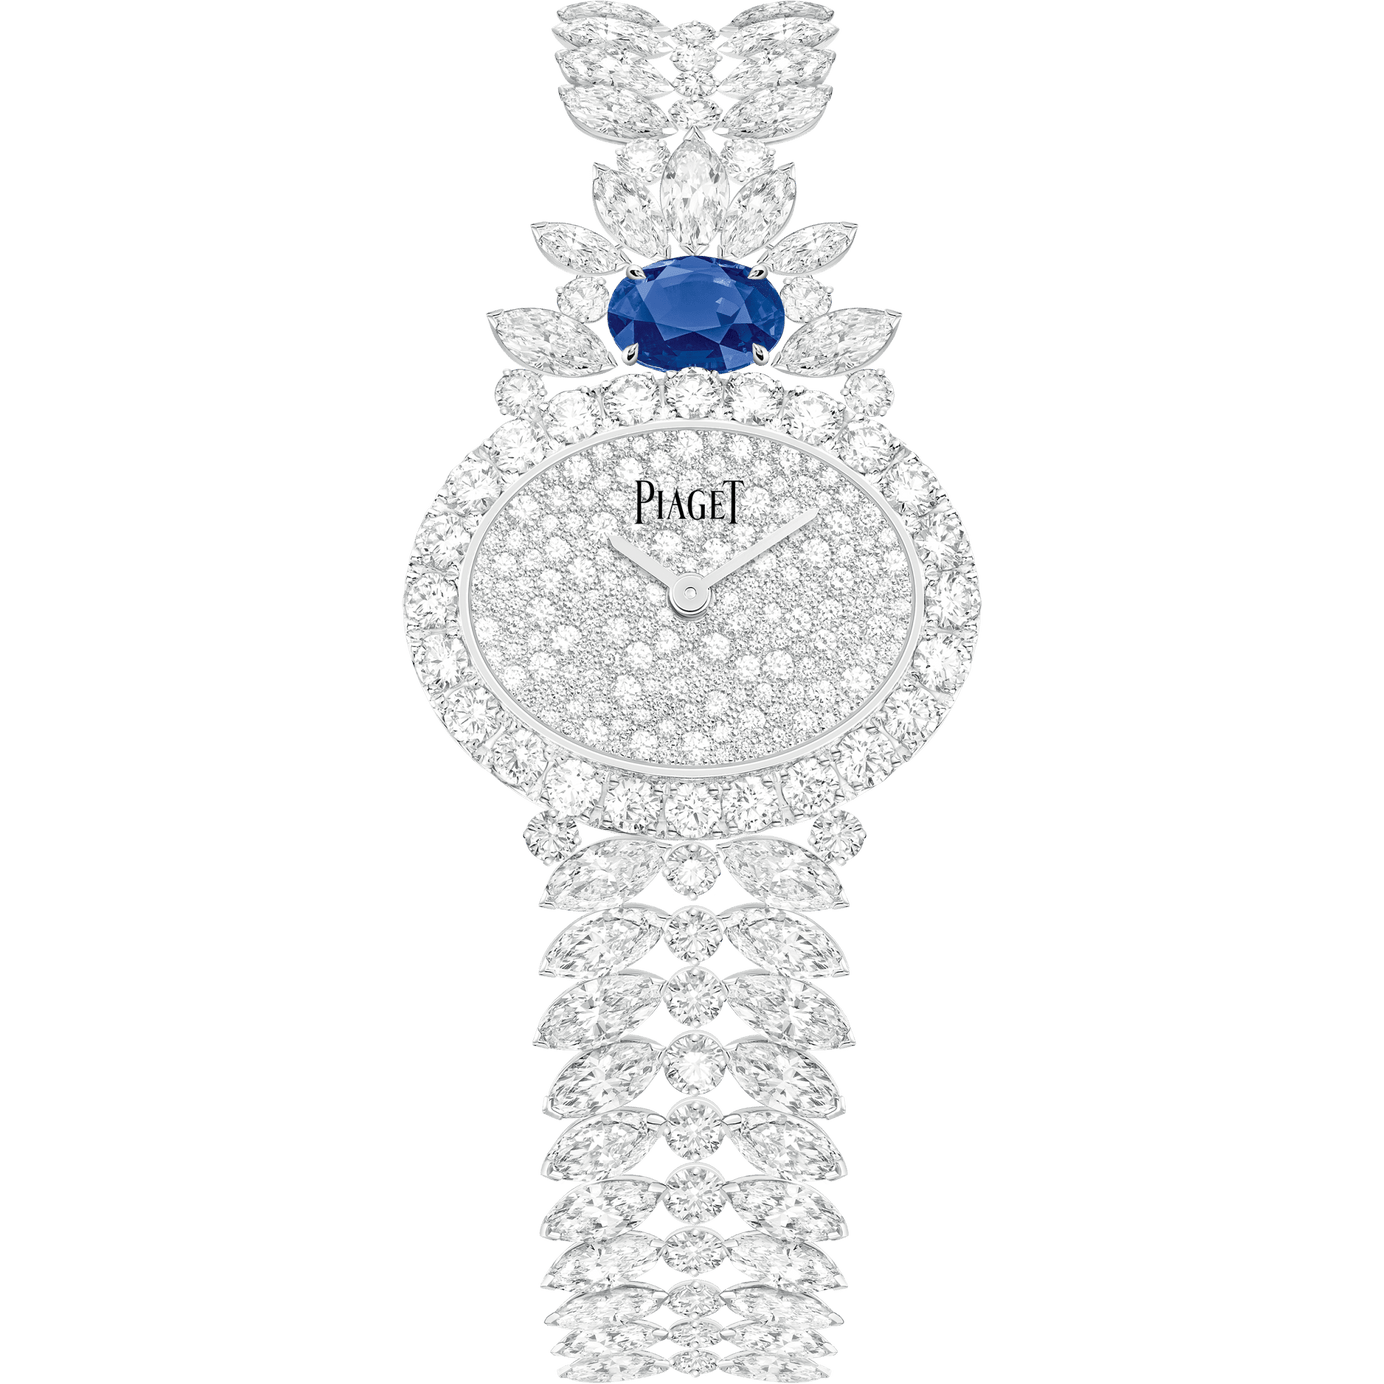 White Gold Sapphire Diamond Watch - Piaget Luxury Watch G0A45026